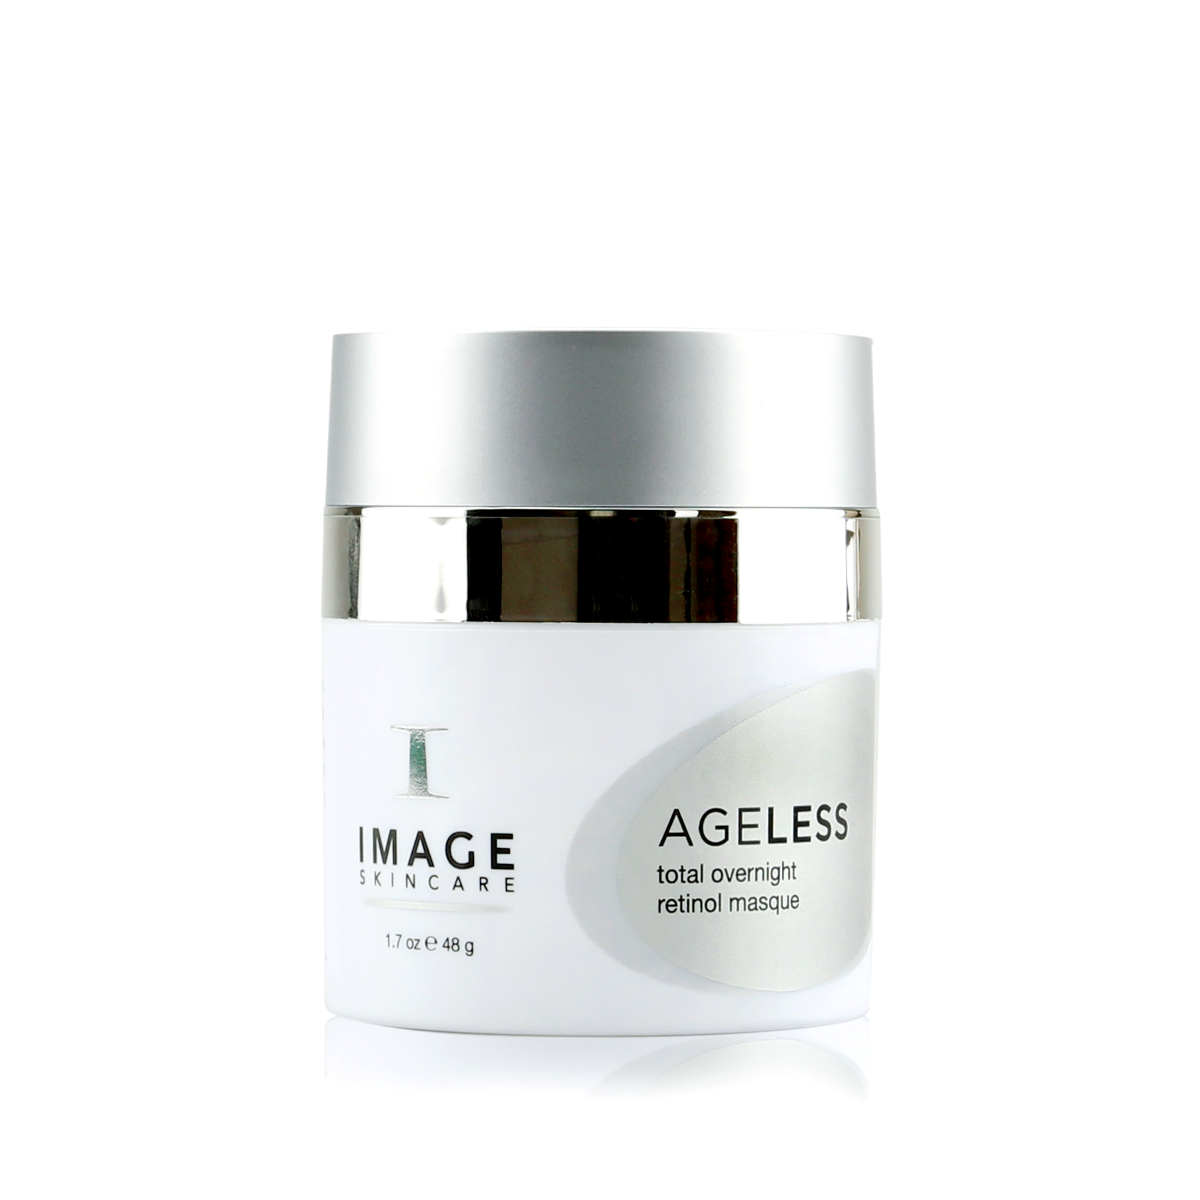 AGELESS total overnight retinol masque | IMAGE Skincare